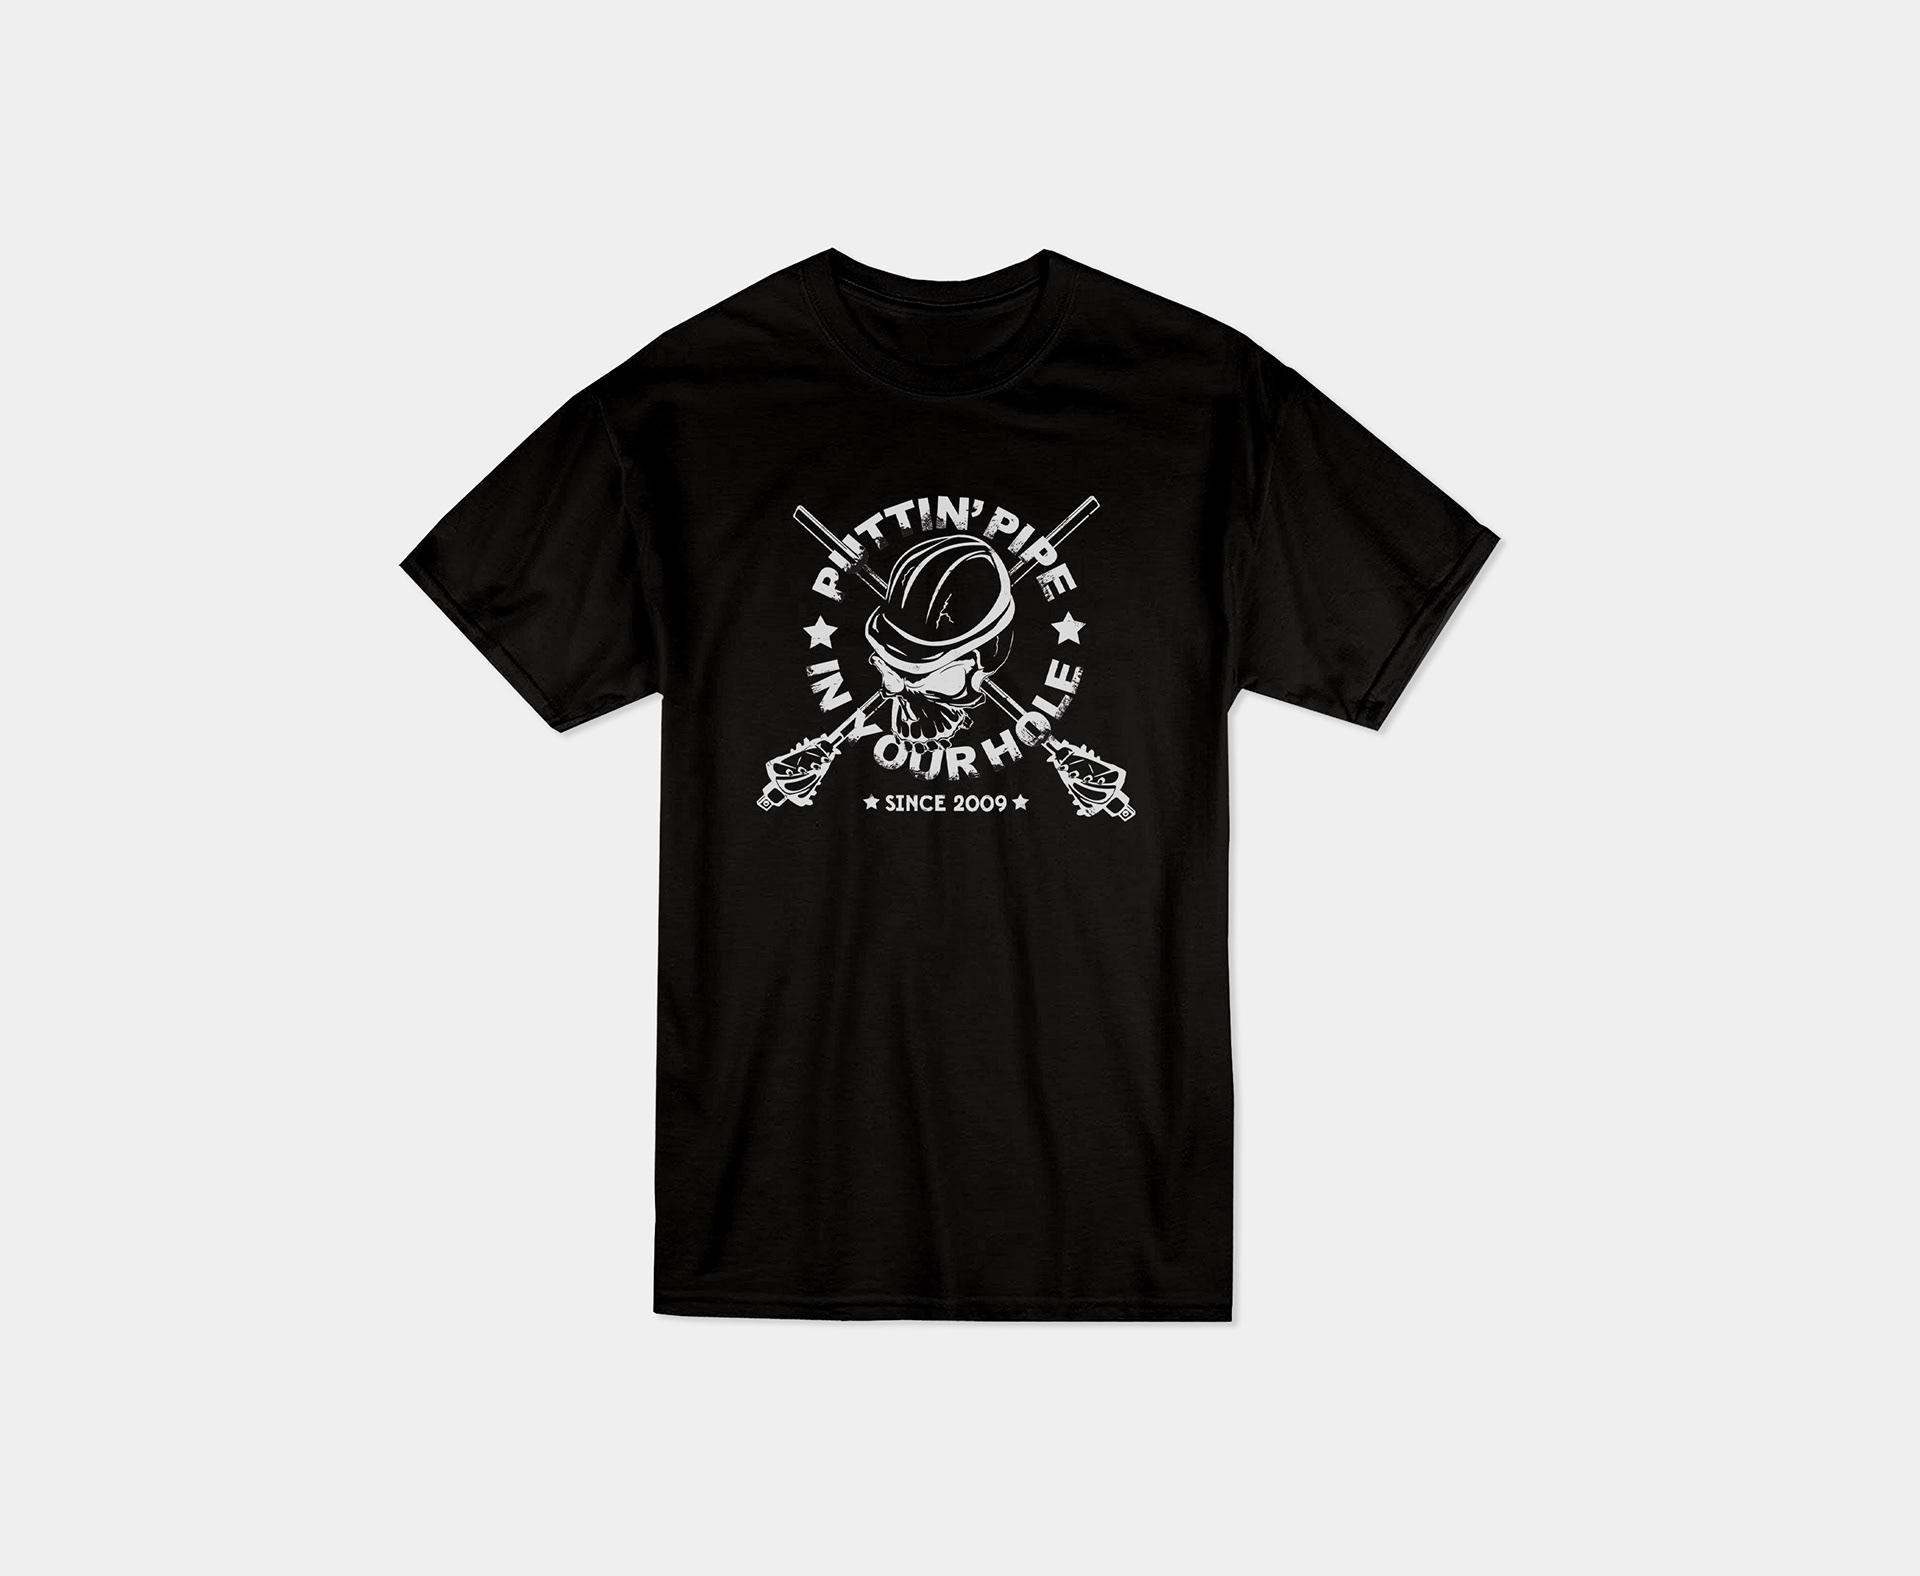 steven paslawsky - Ironman Directional Drilling T-Shirt Designs